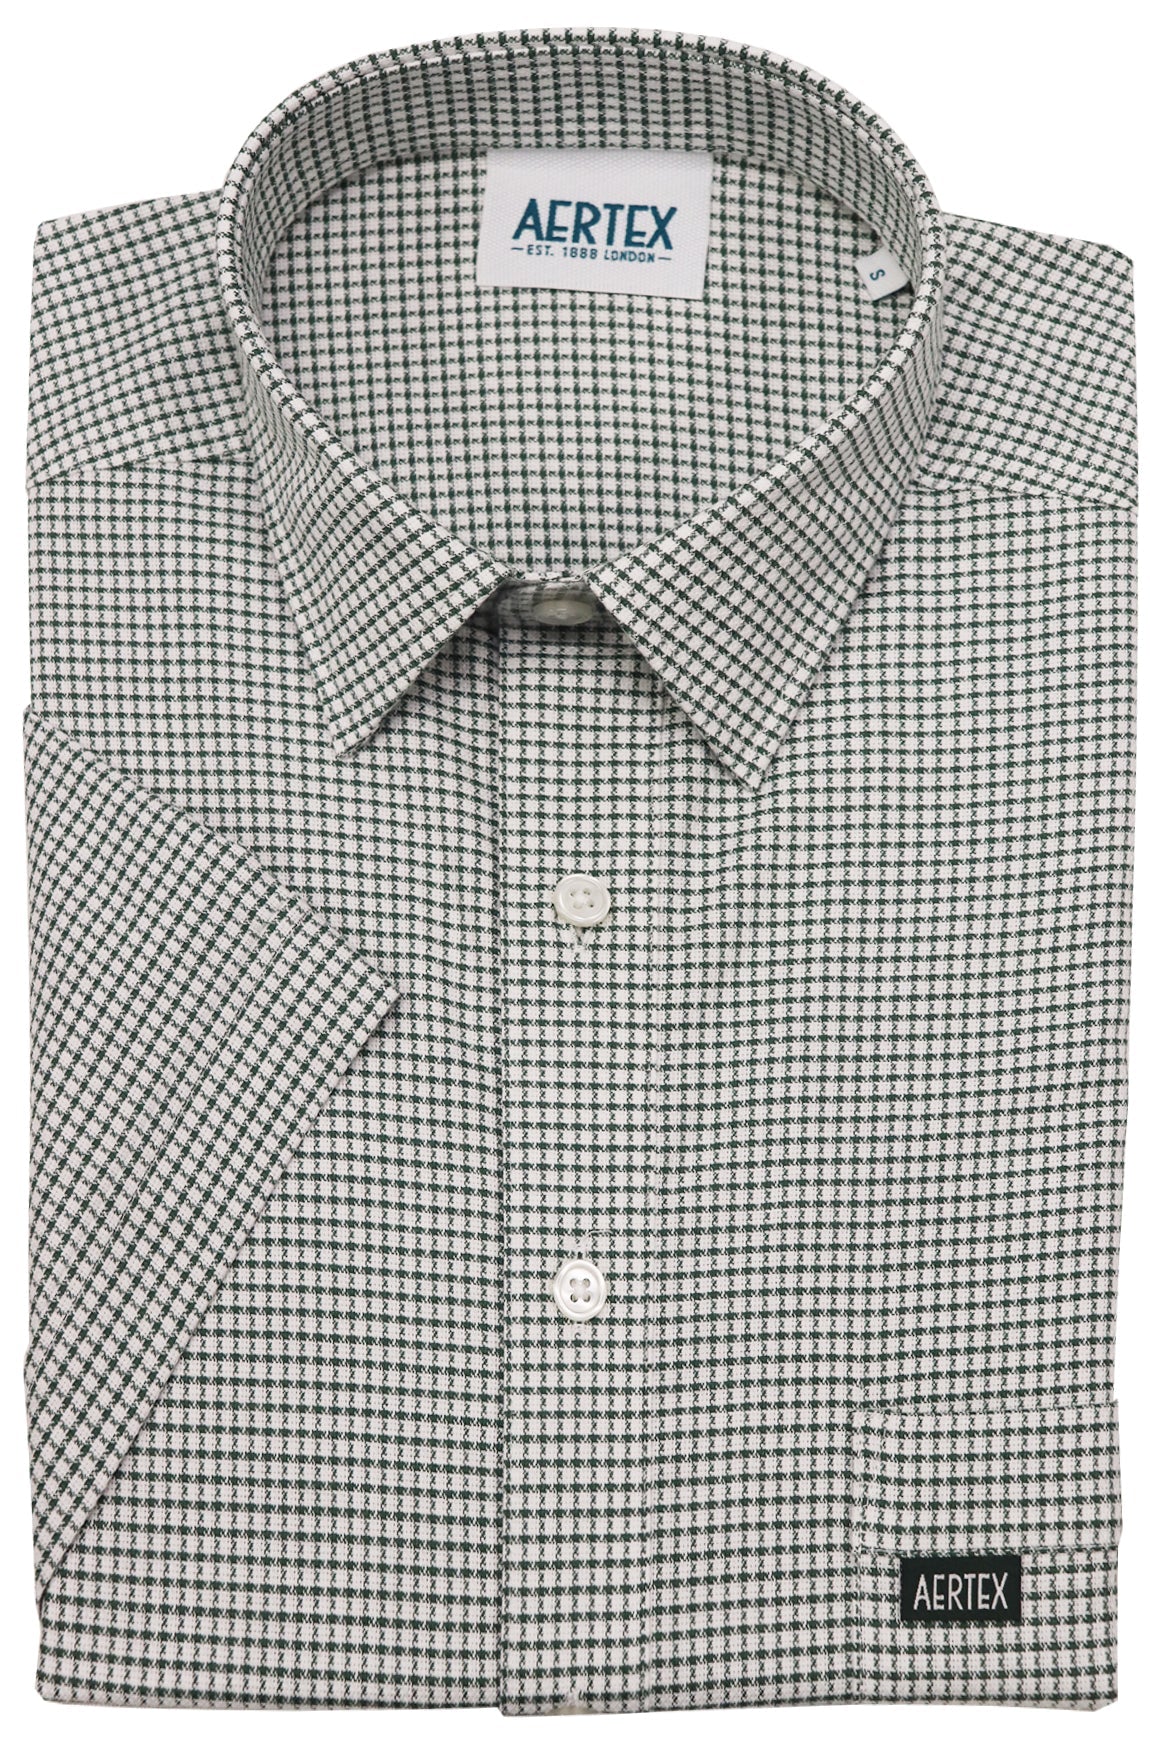 Aertex 88995 Taunton Polo - Thomson's Suits Ltd - Green - S - 3561